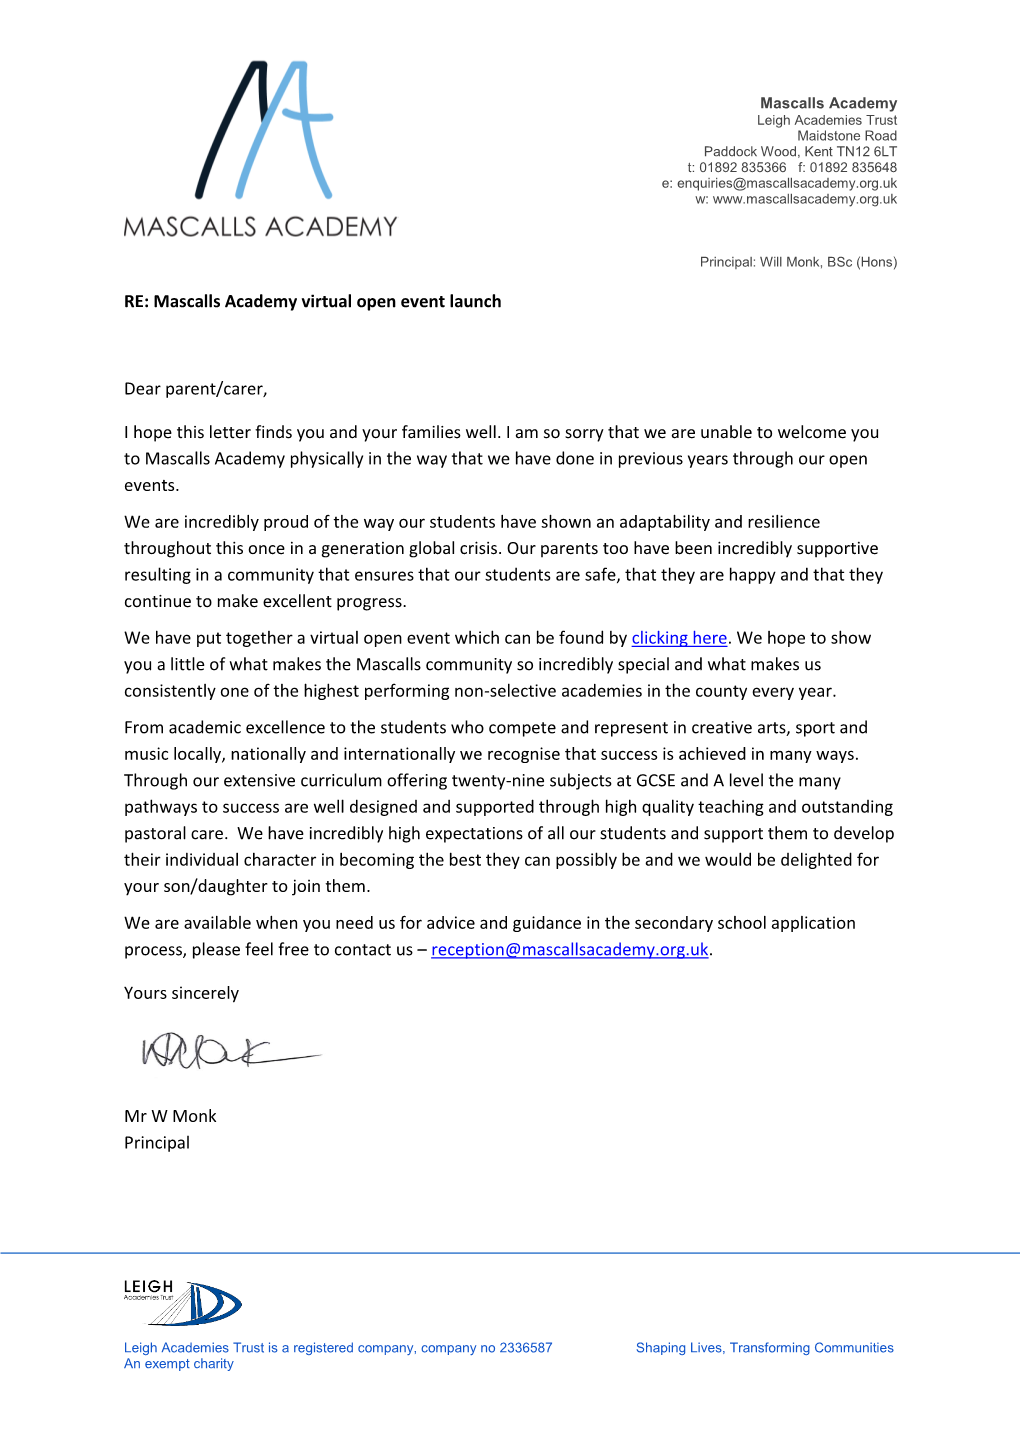 Mascalls Academy Virtual Open Event Launch Dear Parent/Carer, I Hope